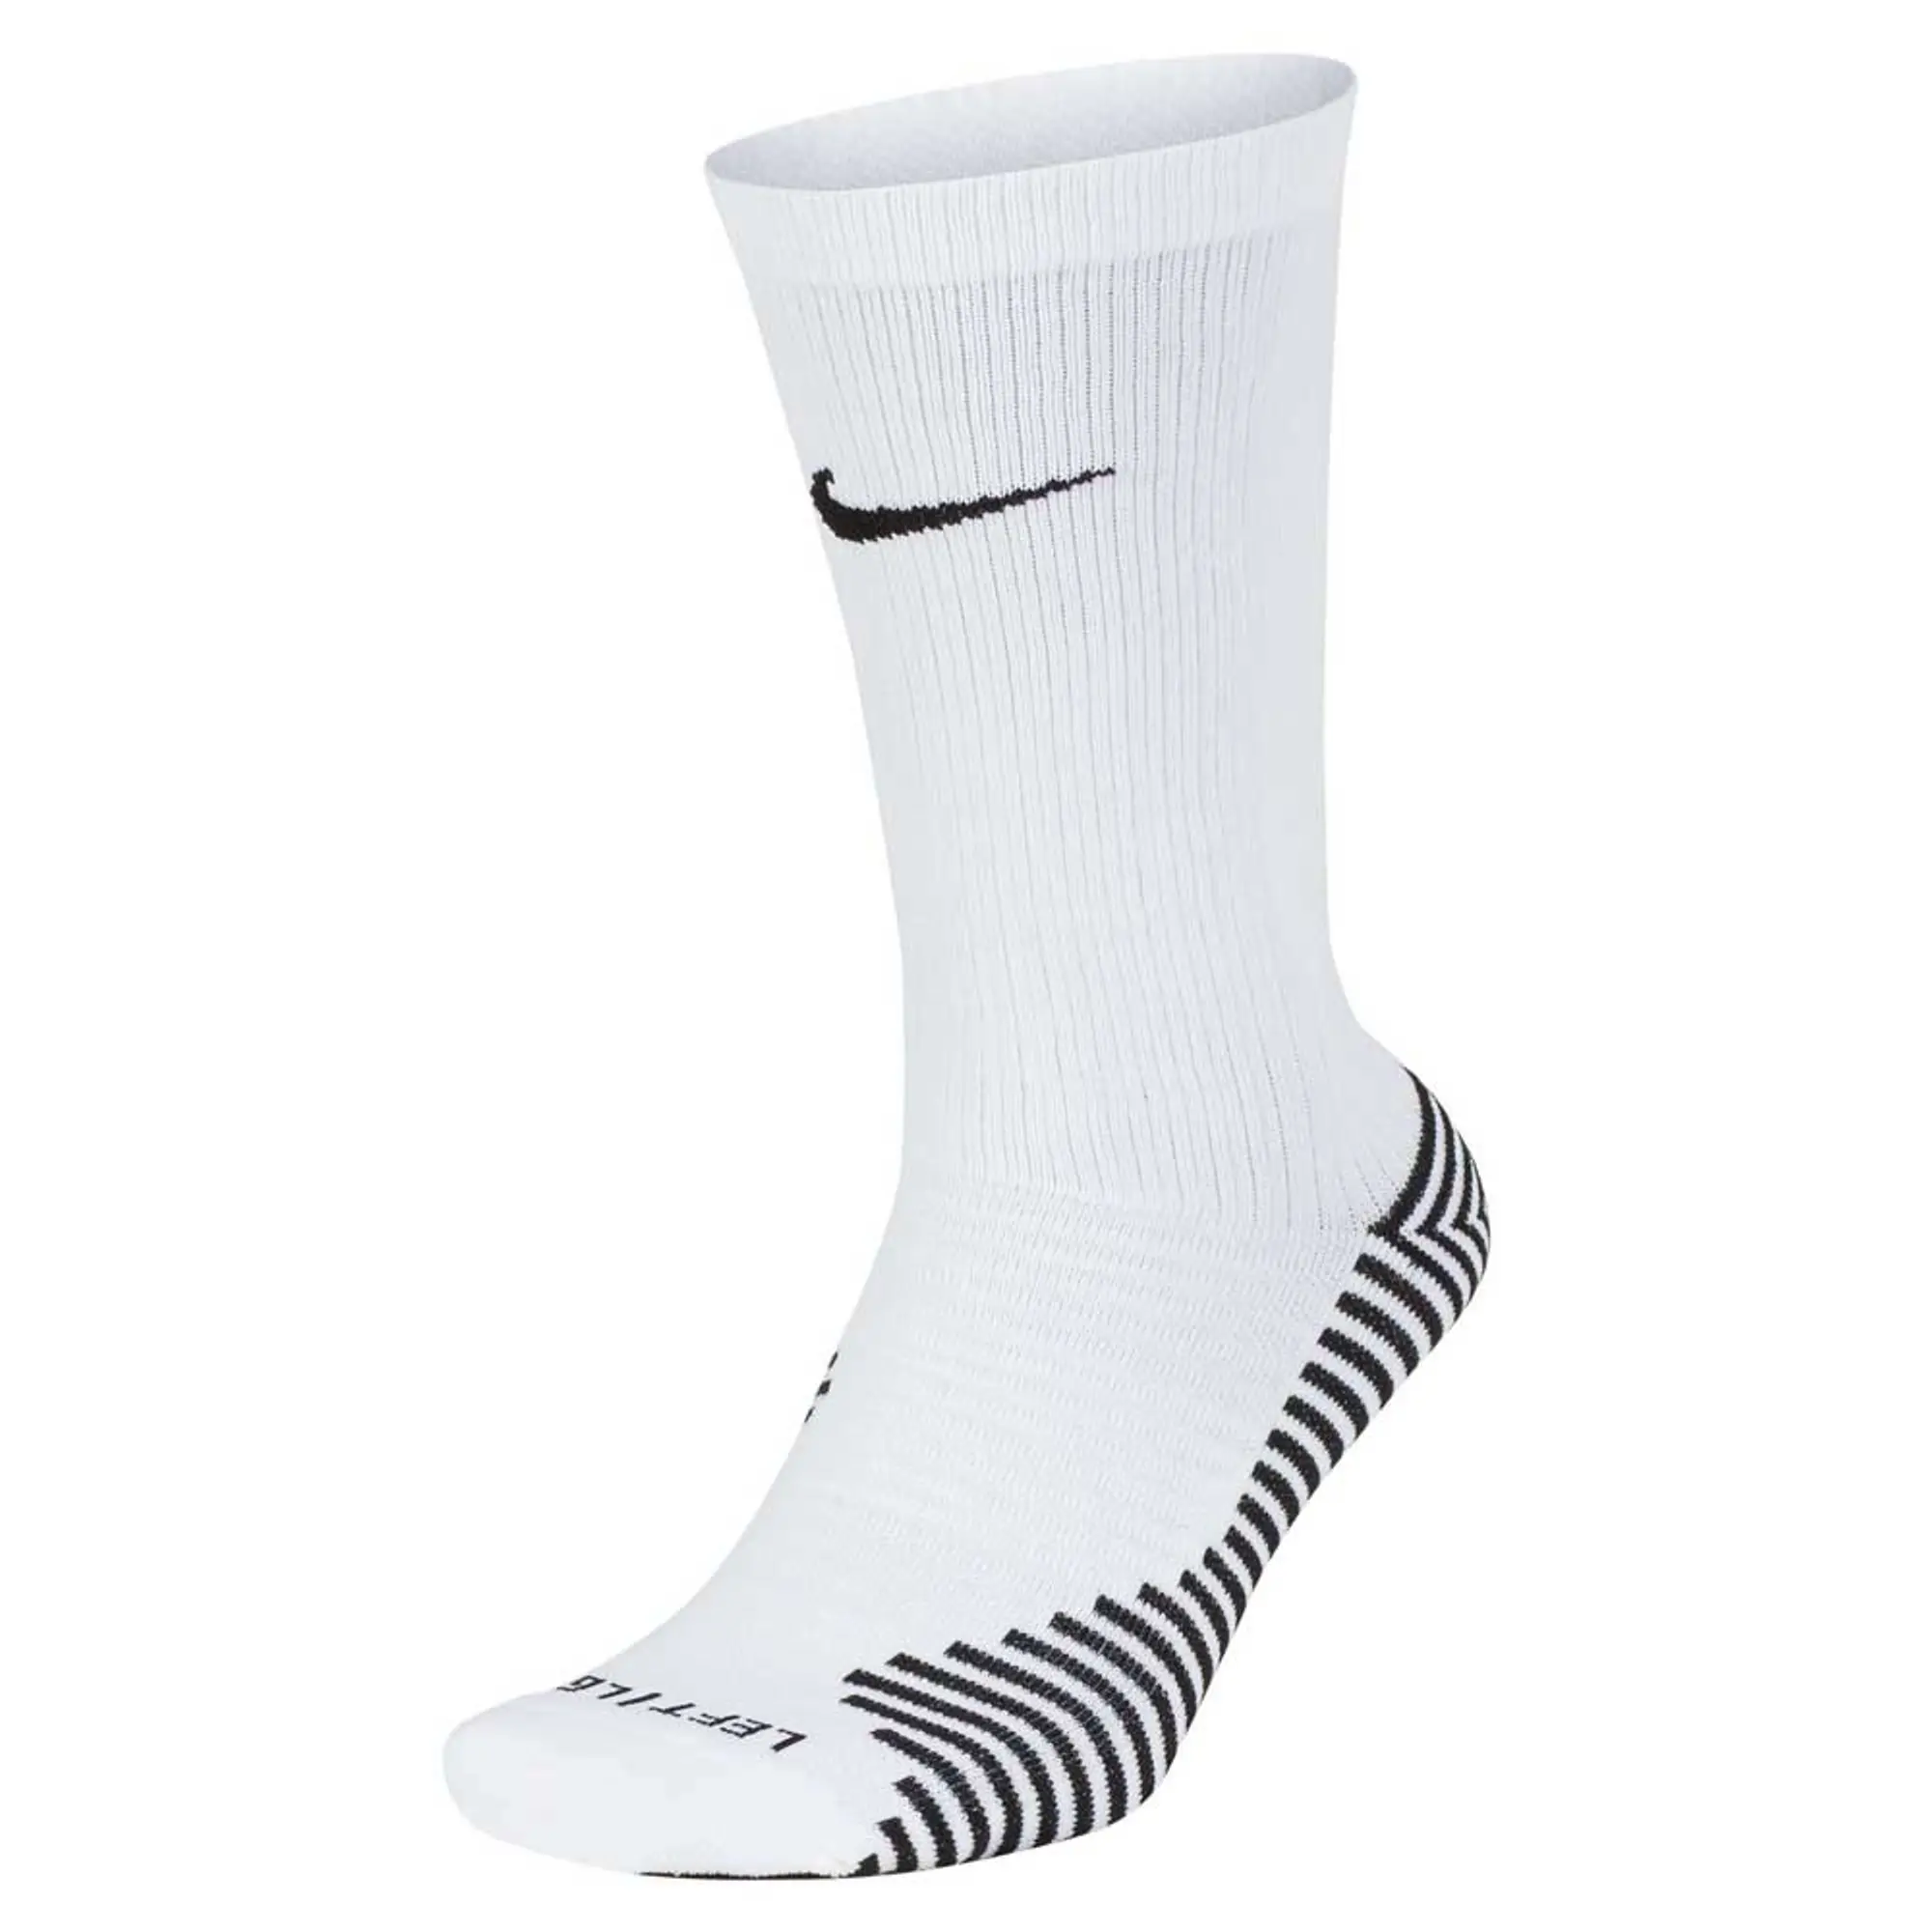 Nike MatchFit Crew Football Socks - White